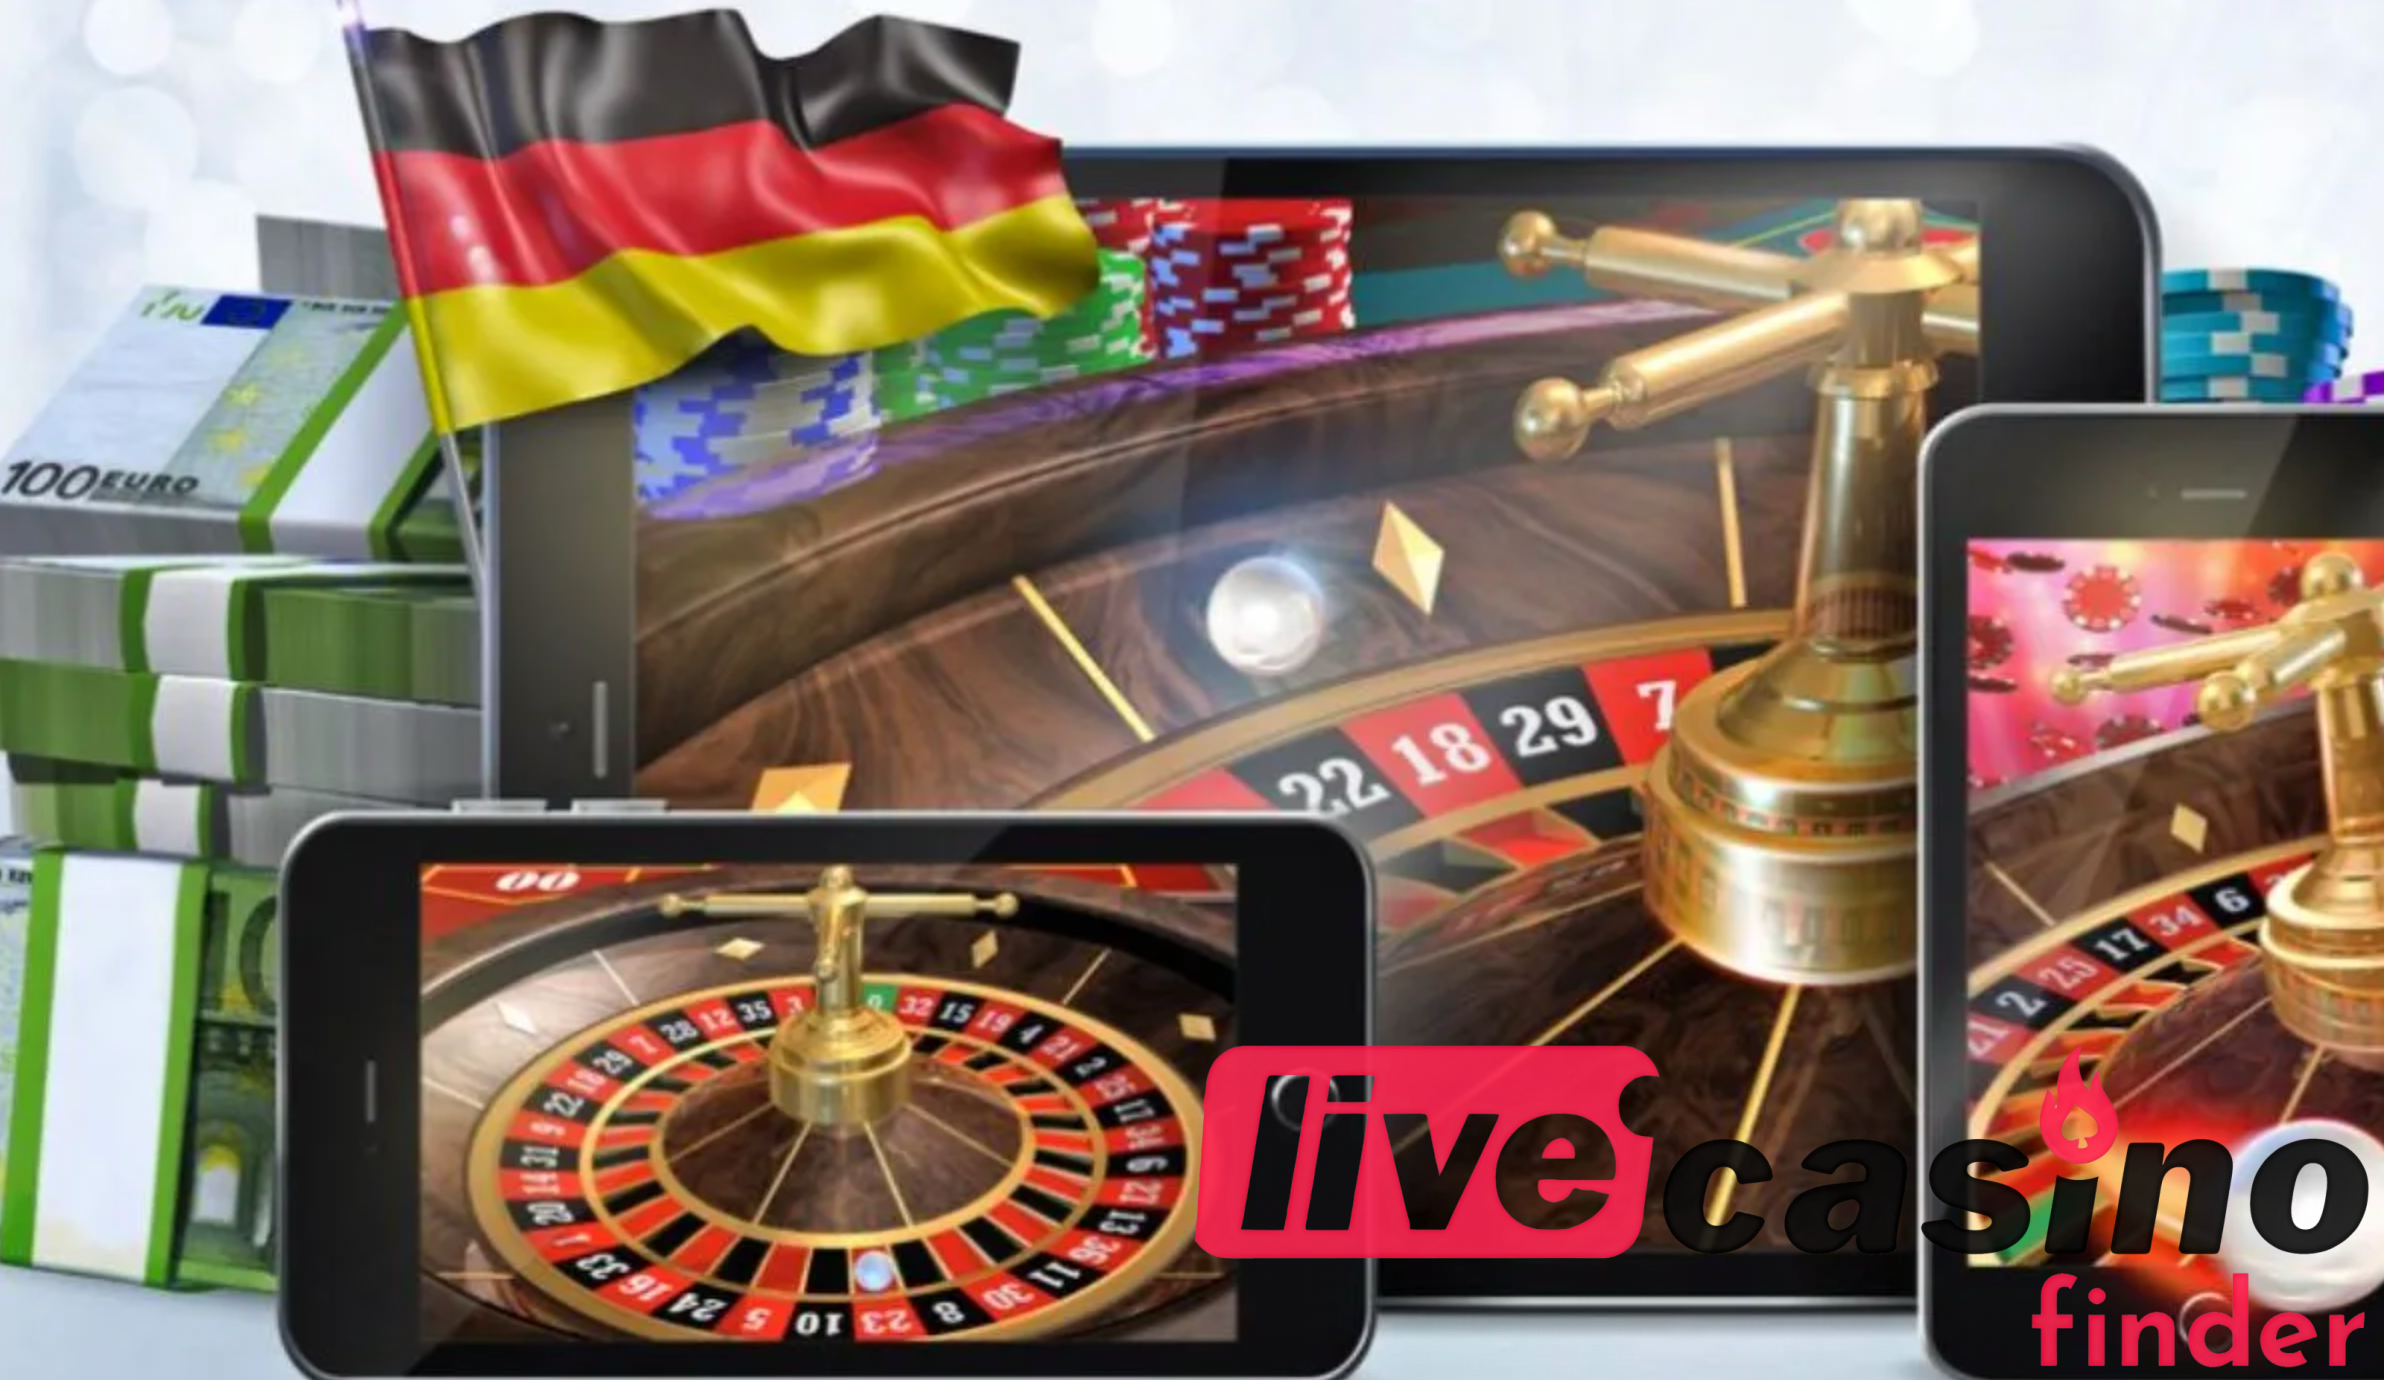 Bedste Tyskland live kasinoer.